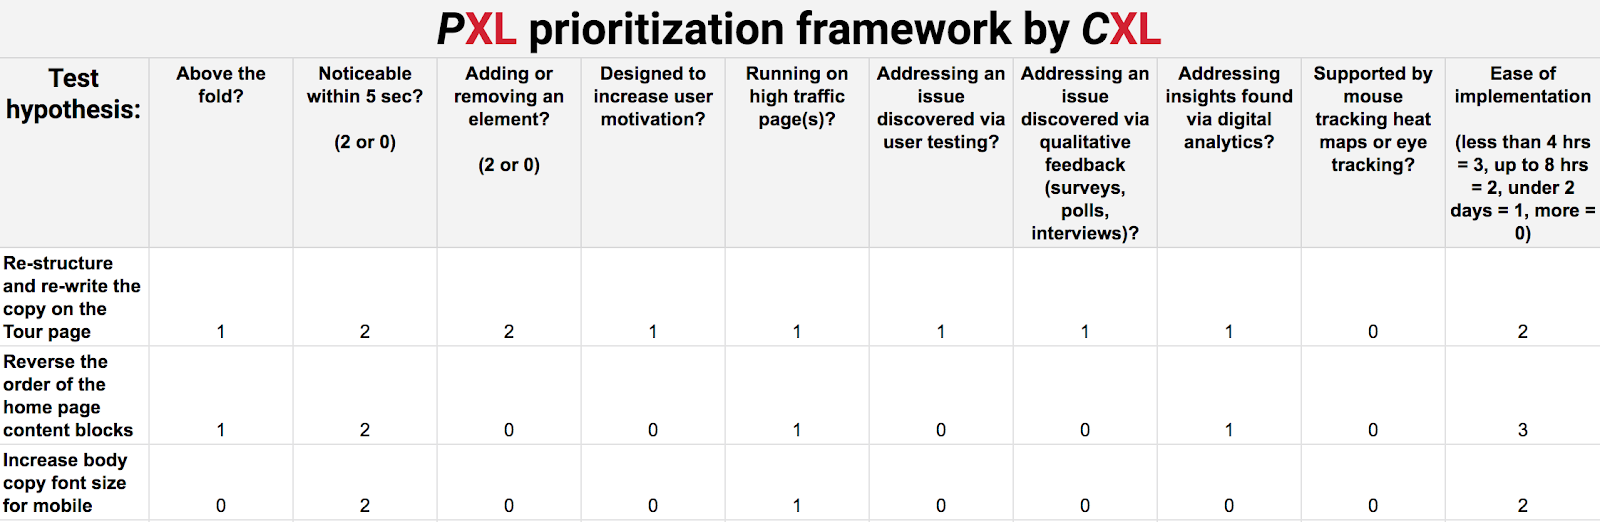 PXL Prioritization Framework by CXL